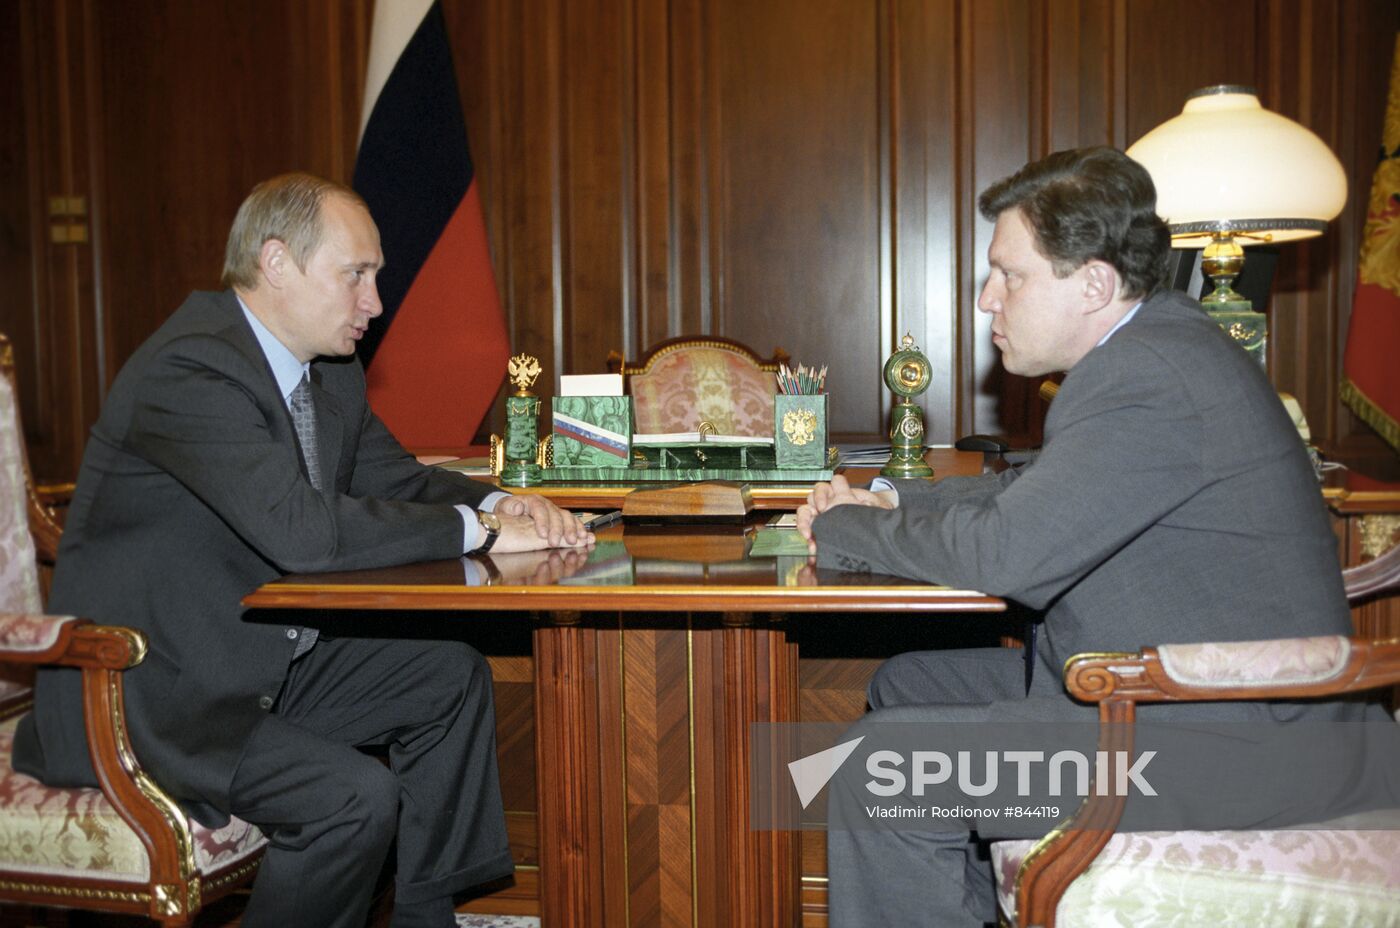 Vladimir Putin meets with Gennady Yavlinsky